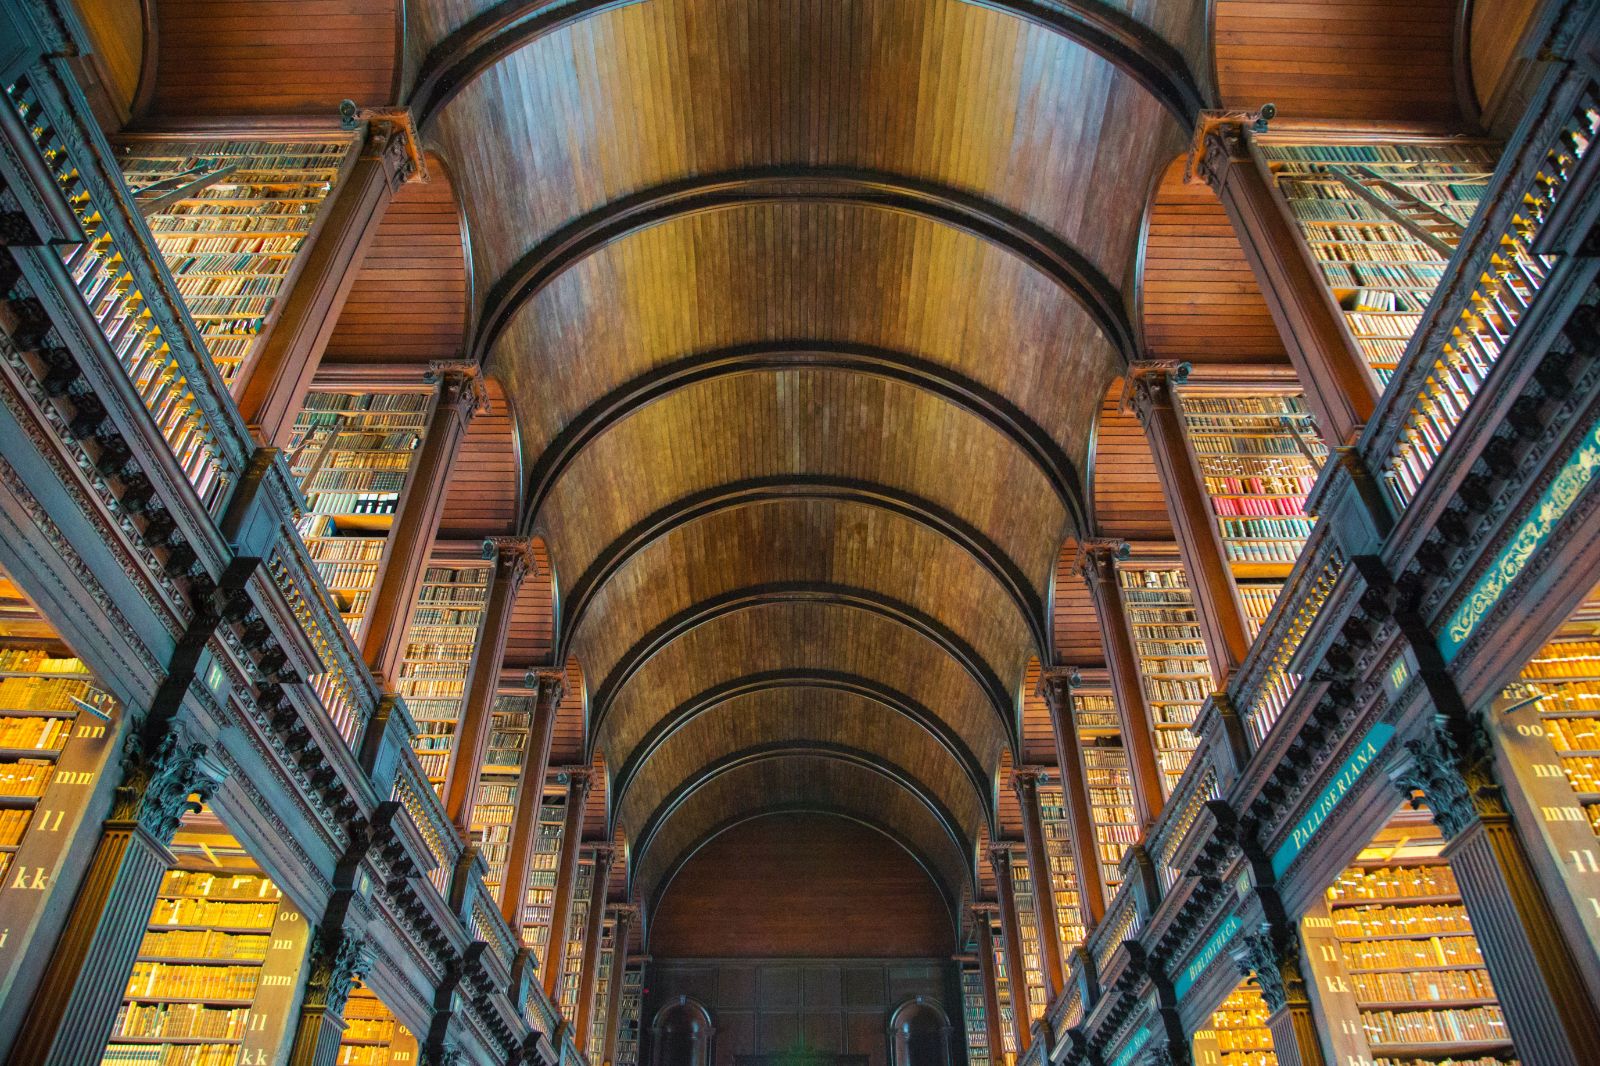 Trinity Library ceiling in Dublin, Ireland